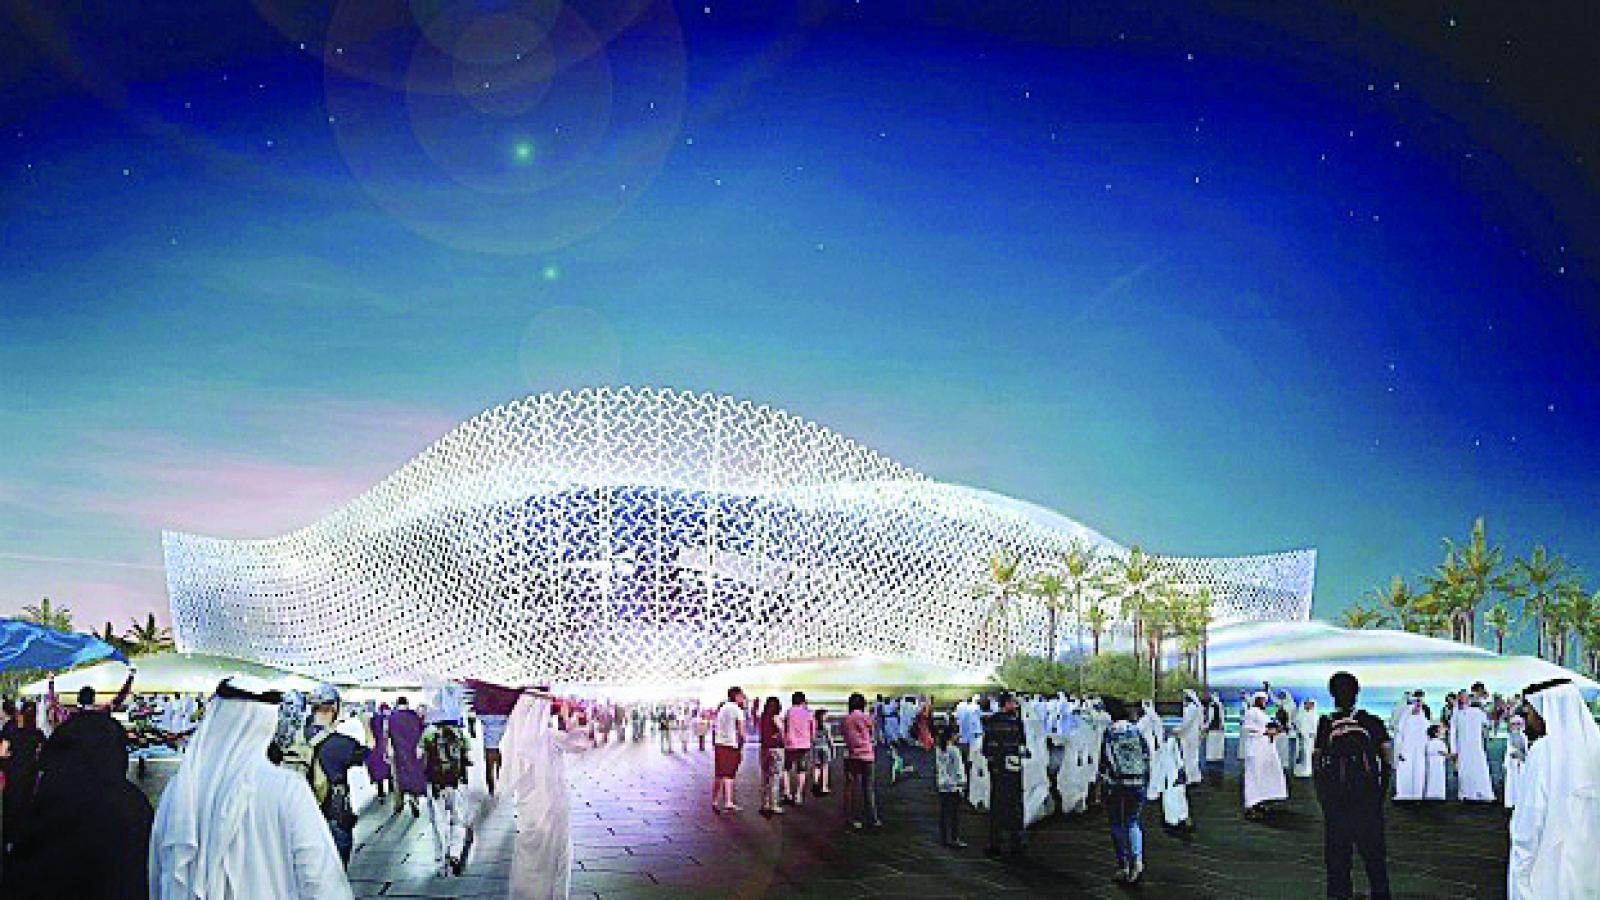 Al Rayyan Stadium project 'to be shining light of Qatar investments